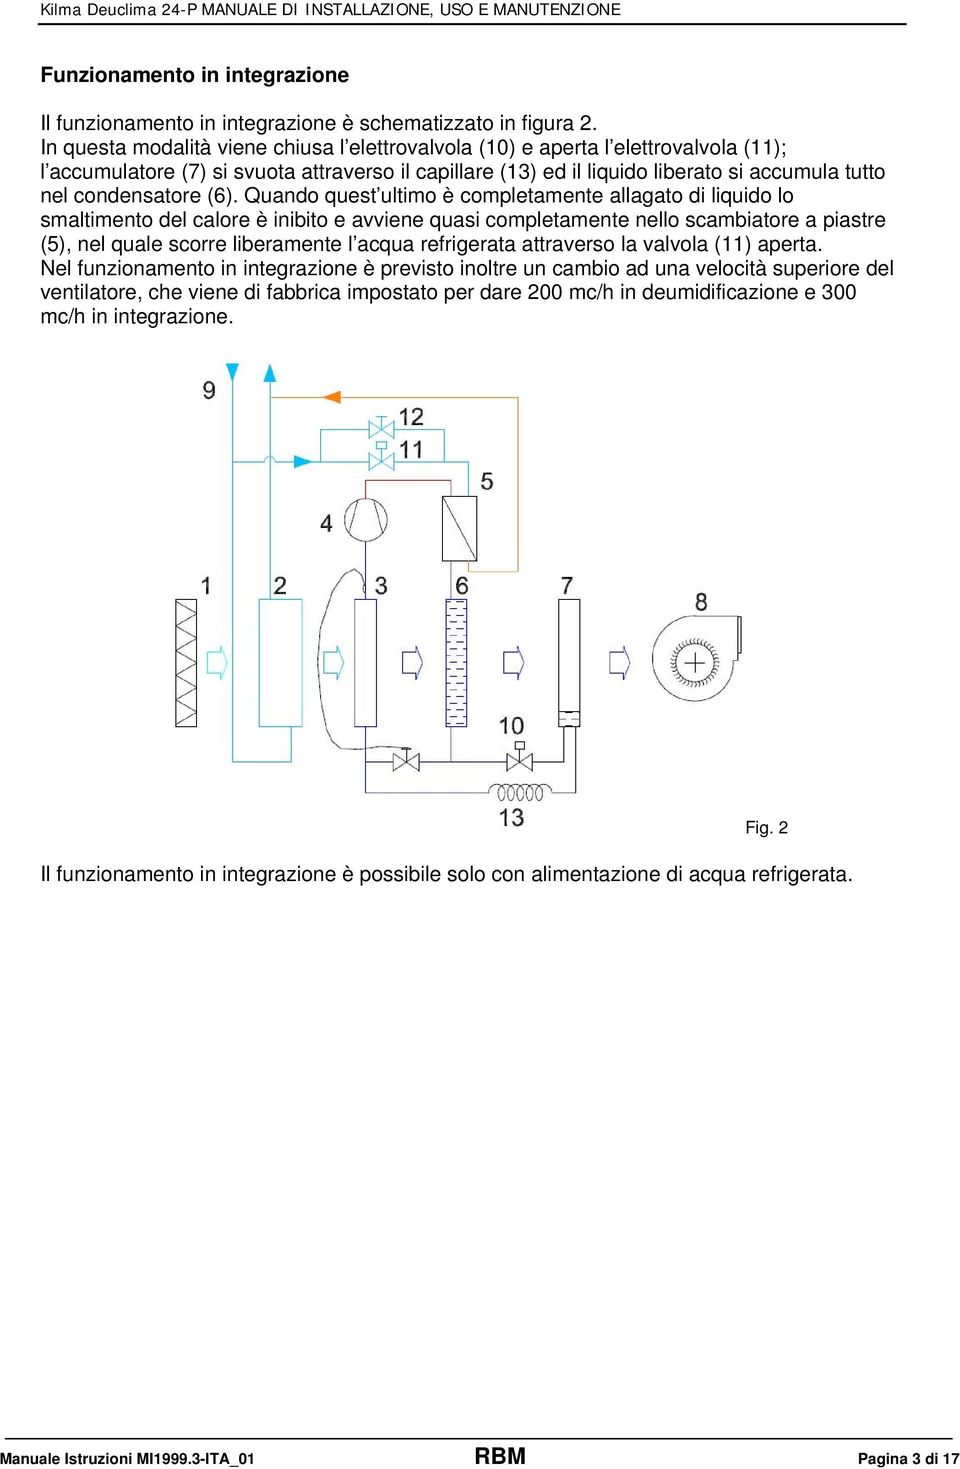 condensatore (6).